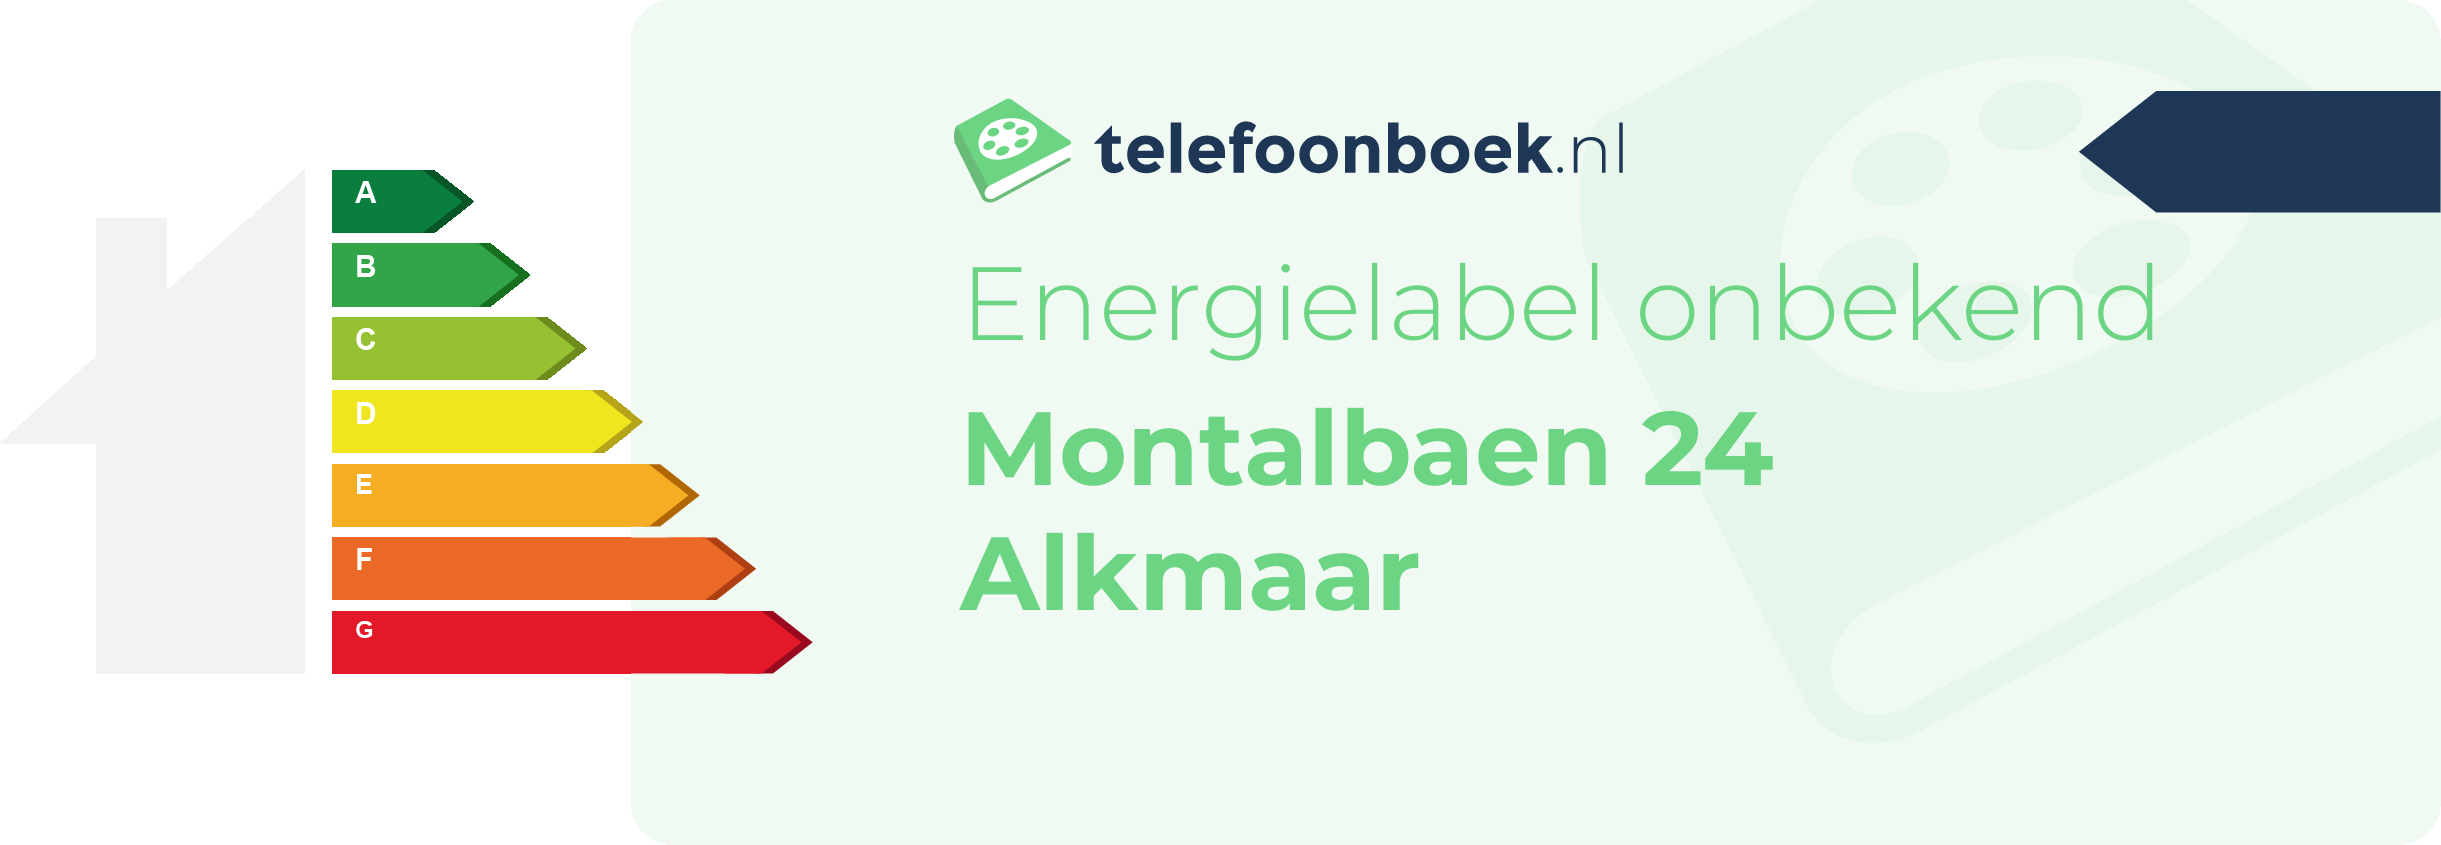 Energielabel Montalbaen 24 Alkmaar